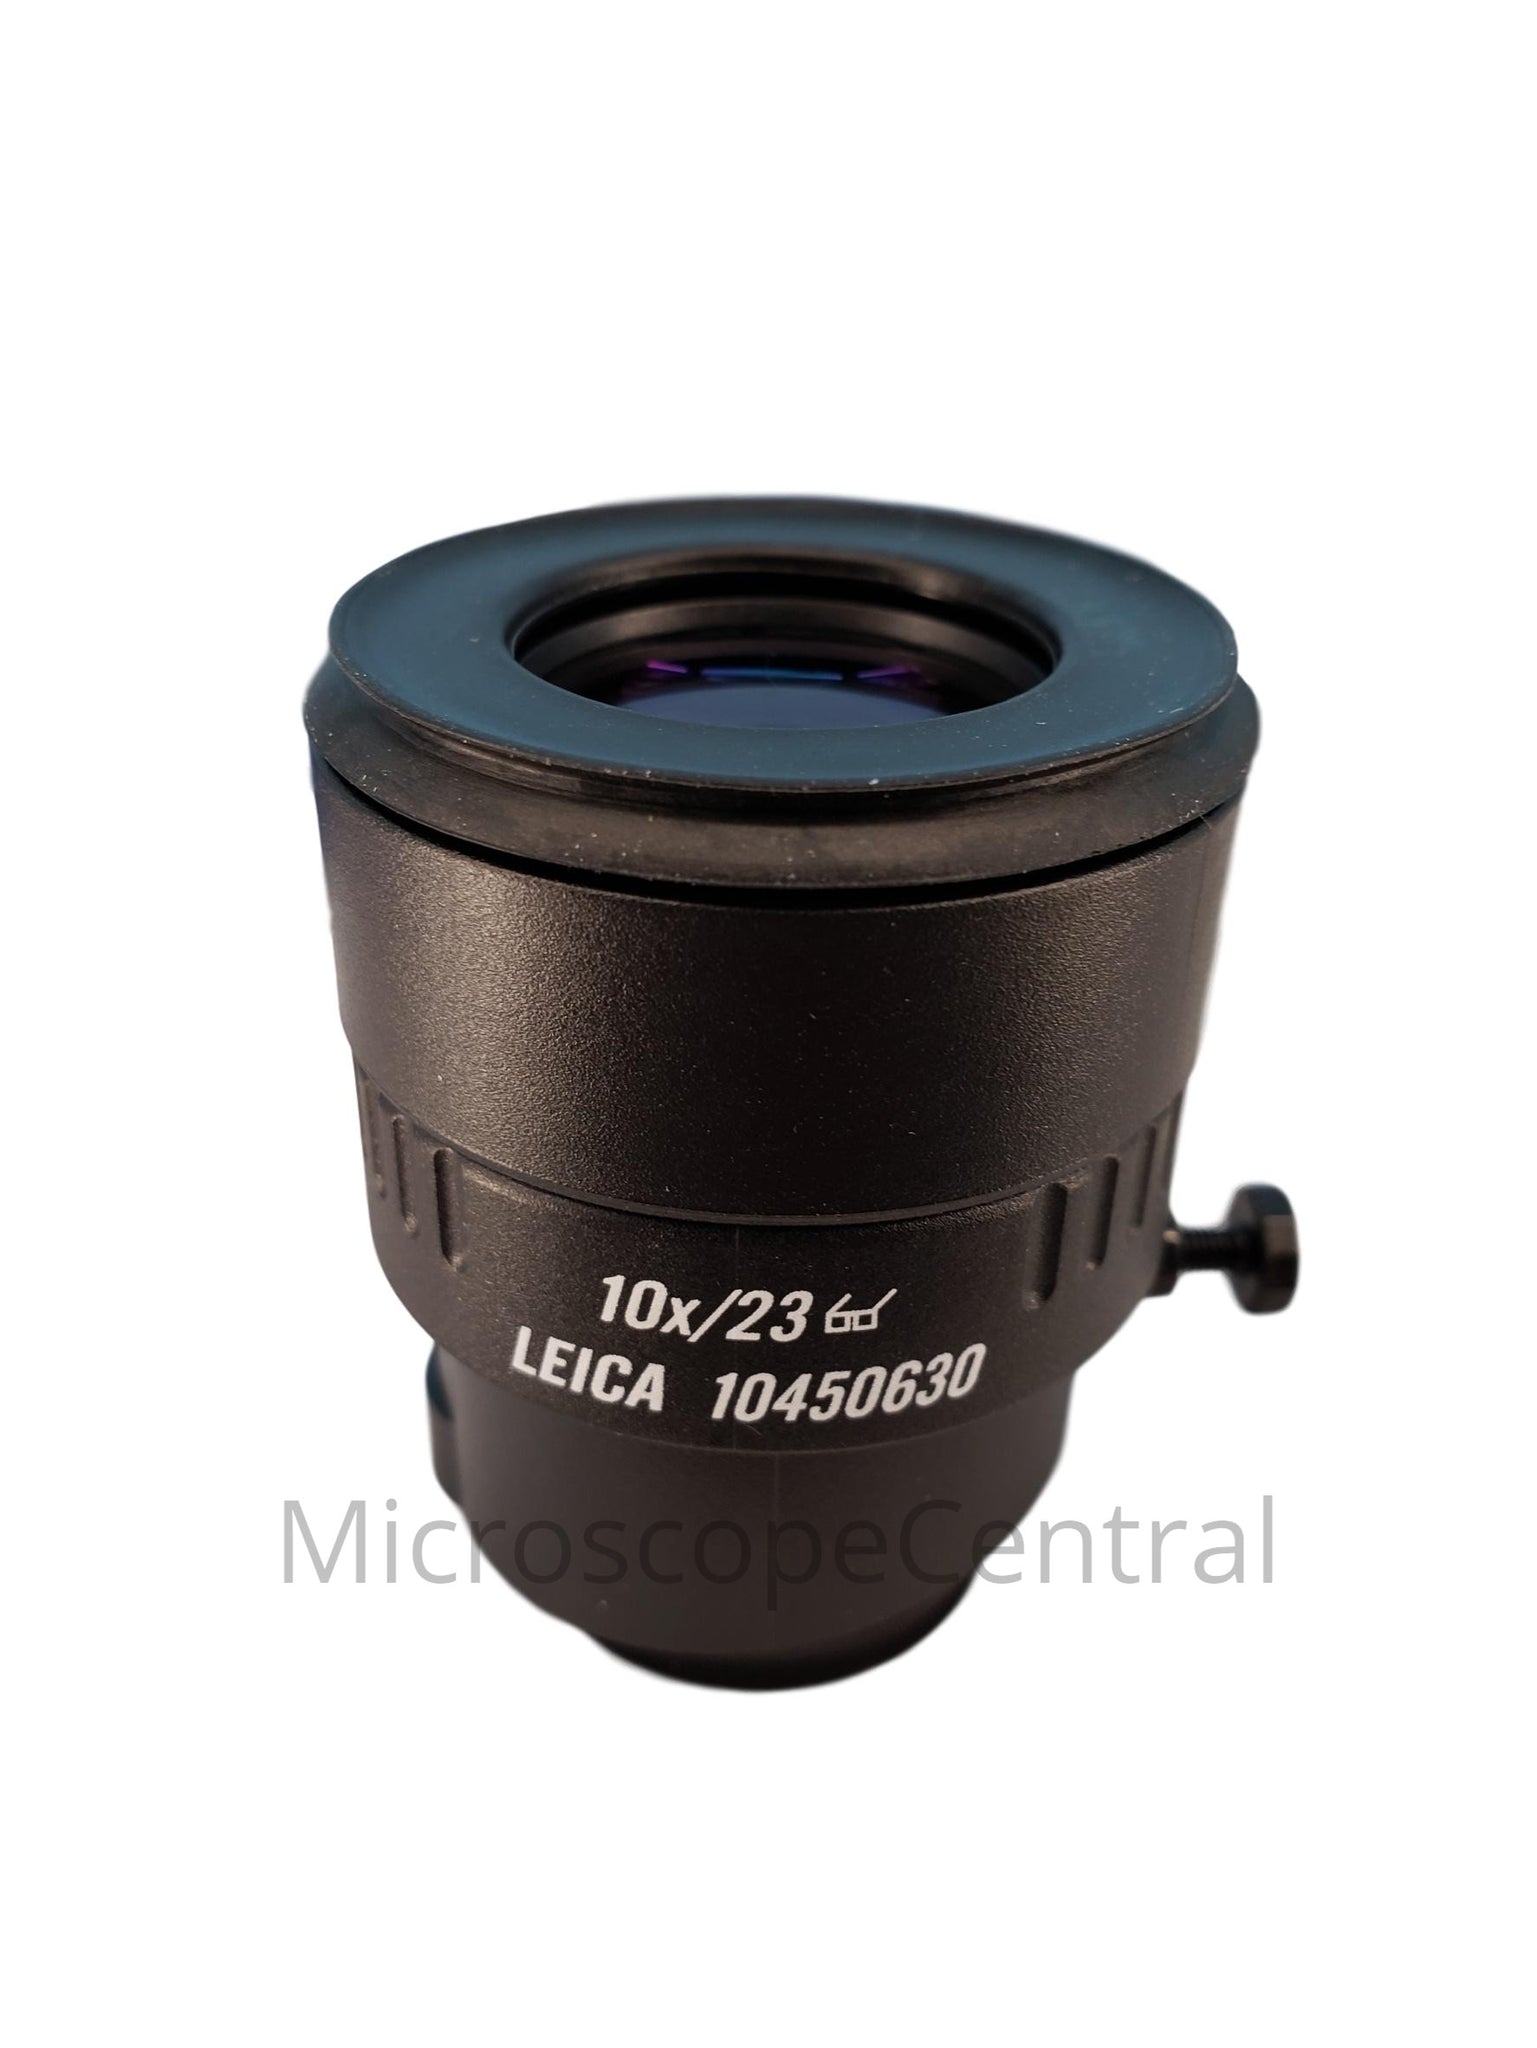 Leica 10x/23B Widefield Stereo Microscope Eyepiece